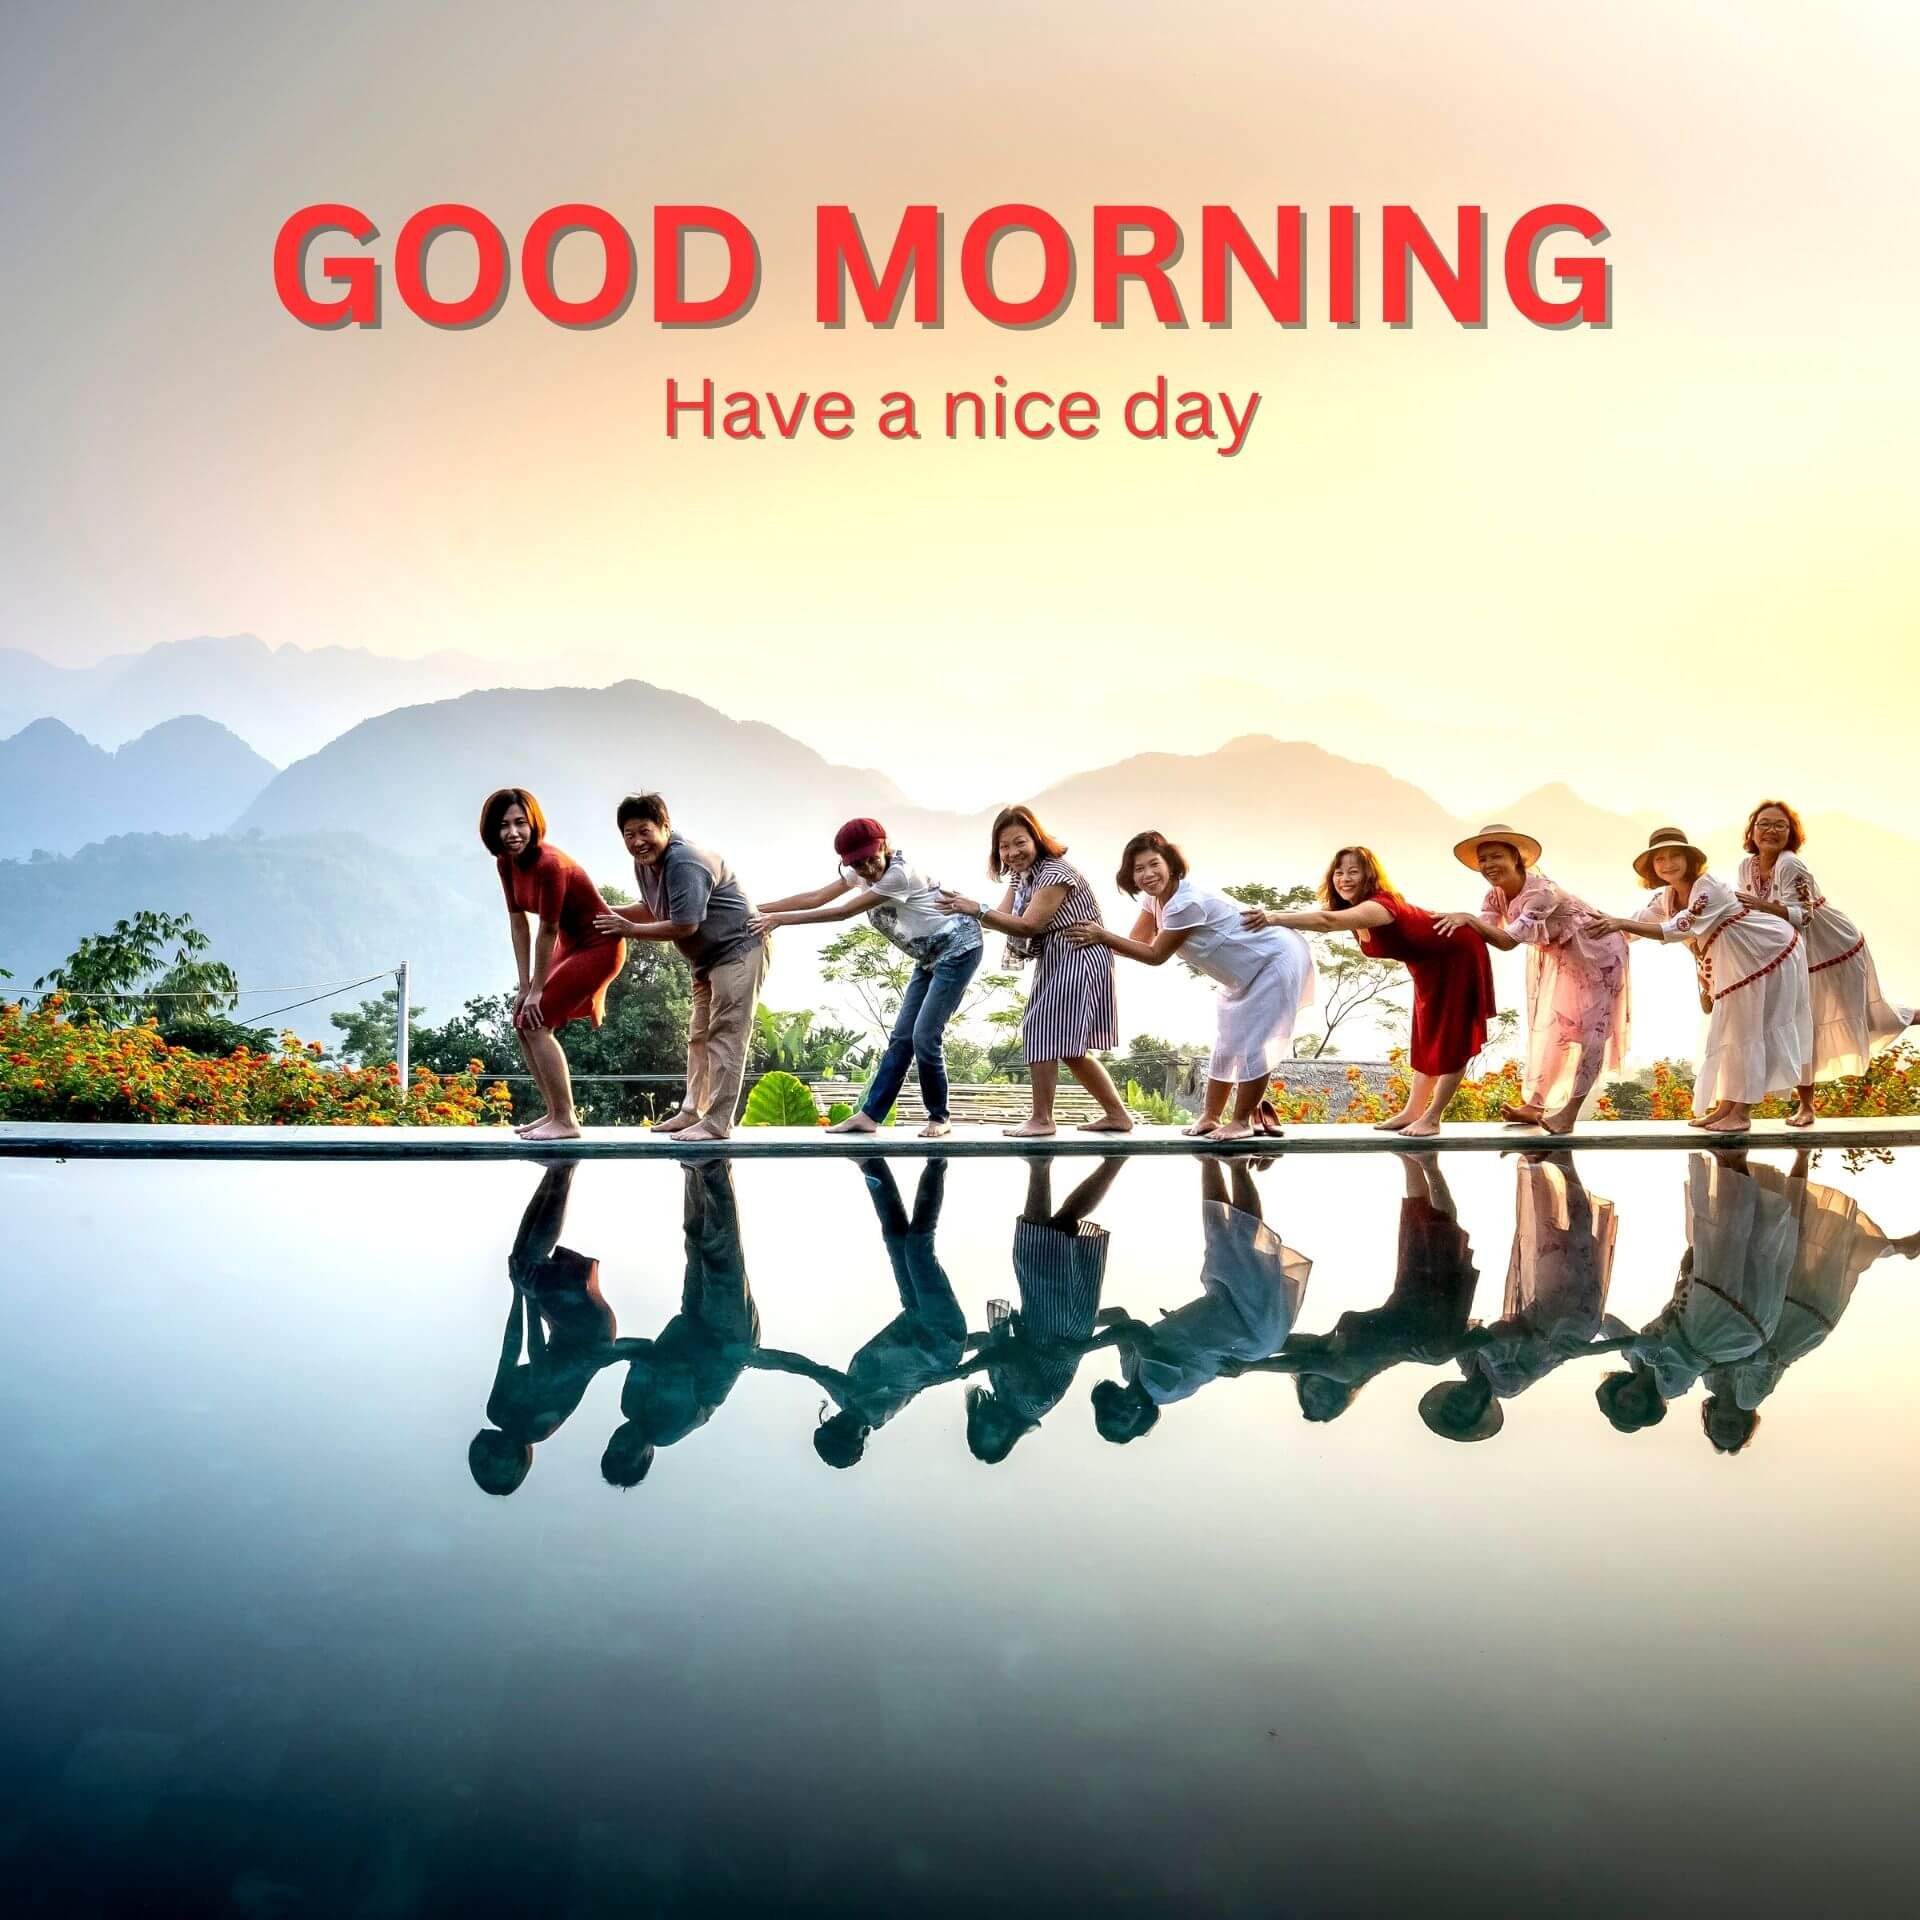 Happy Good Morning Pics Wallpaper for Facebook